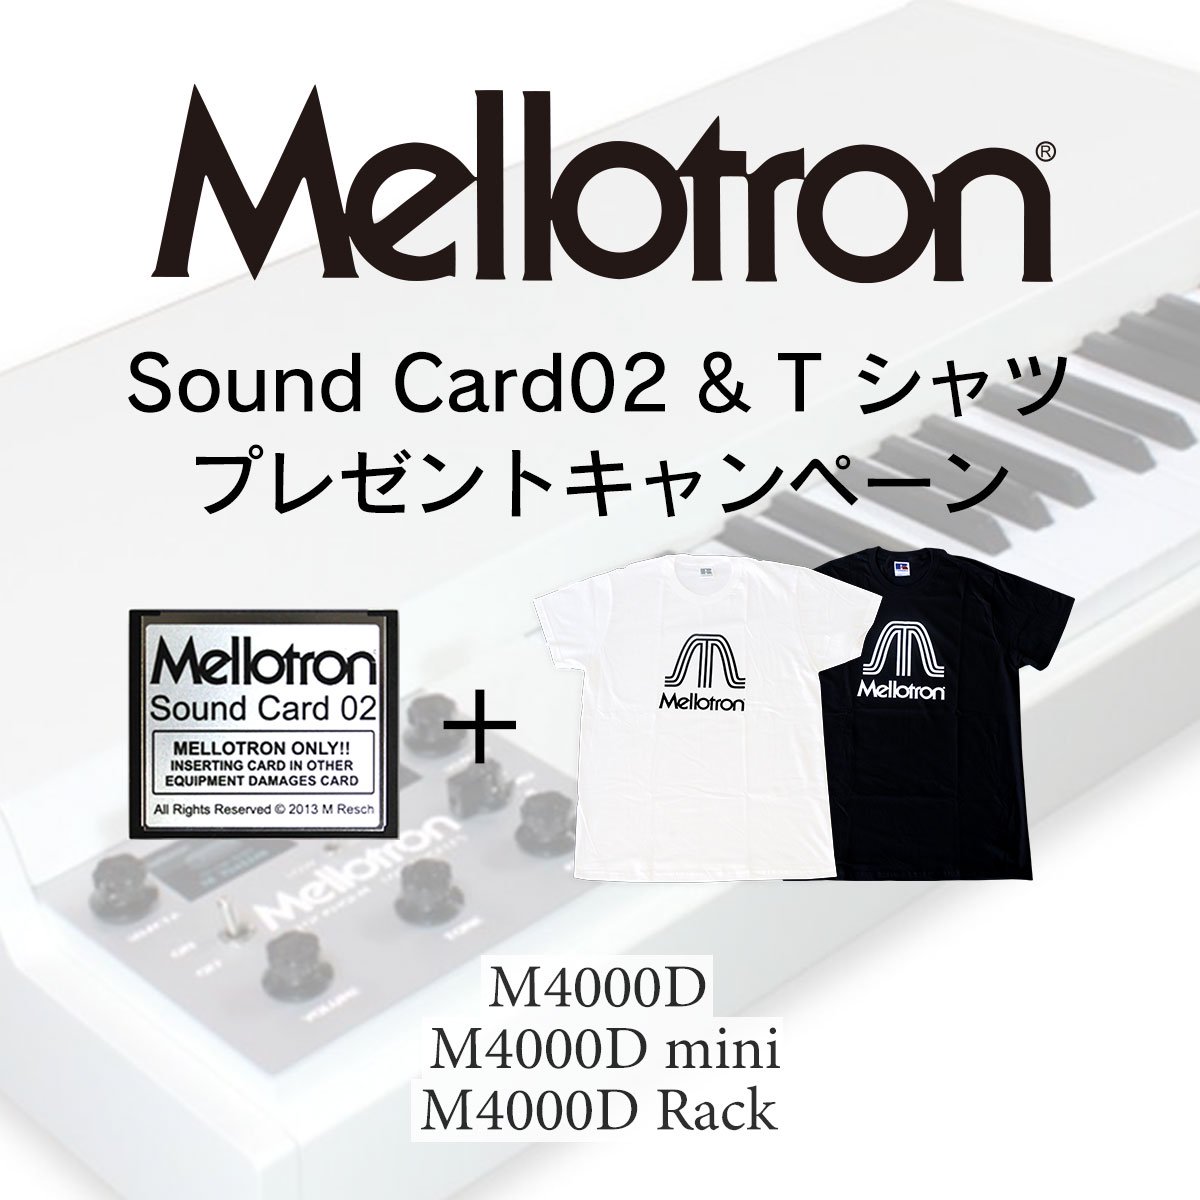 mellotron_tshirts_campaign.jpg